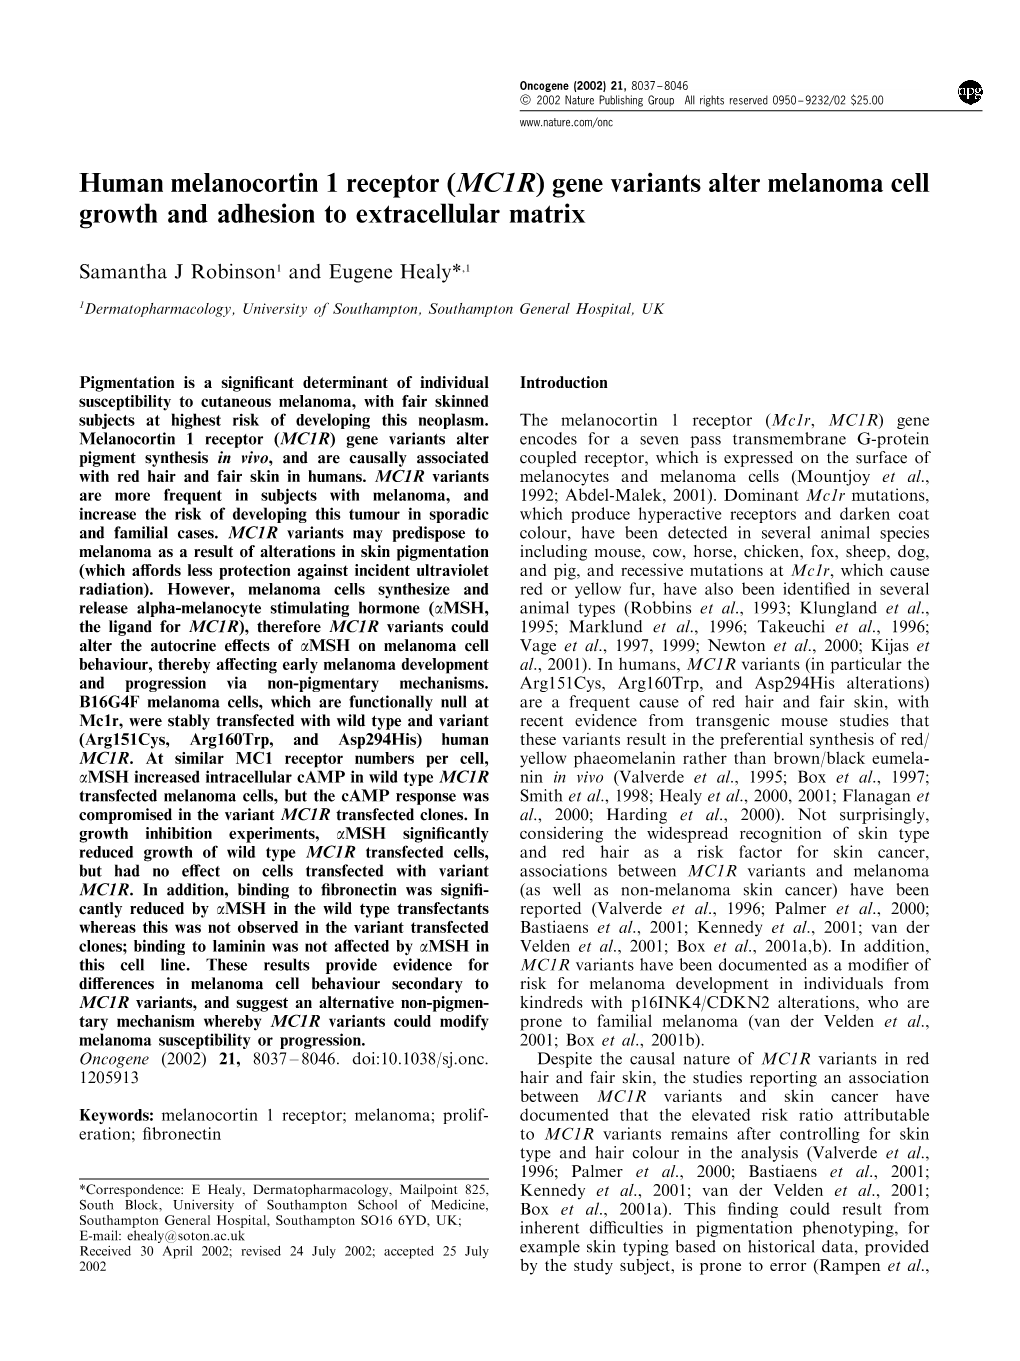 Human Melanocortin 1 Receptor (MC1R) Gene Variants Alter Melanoma Cell Growth and Adhesion to Extracellular Matrix